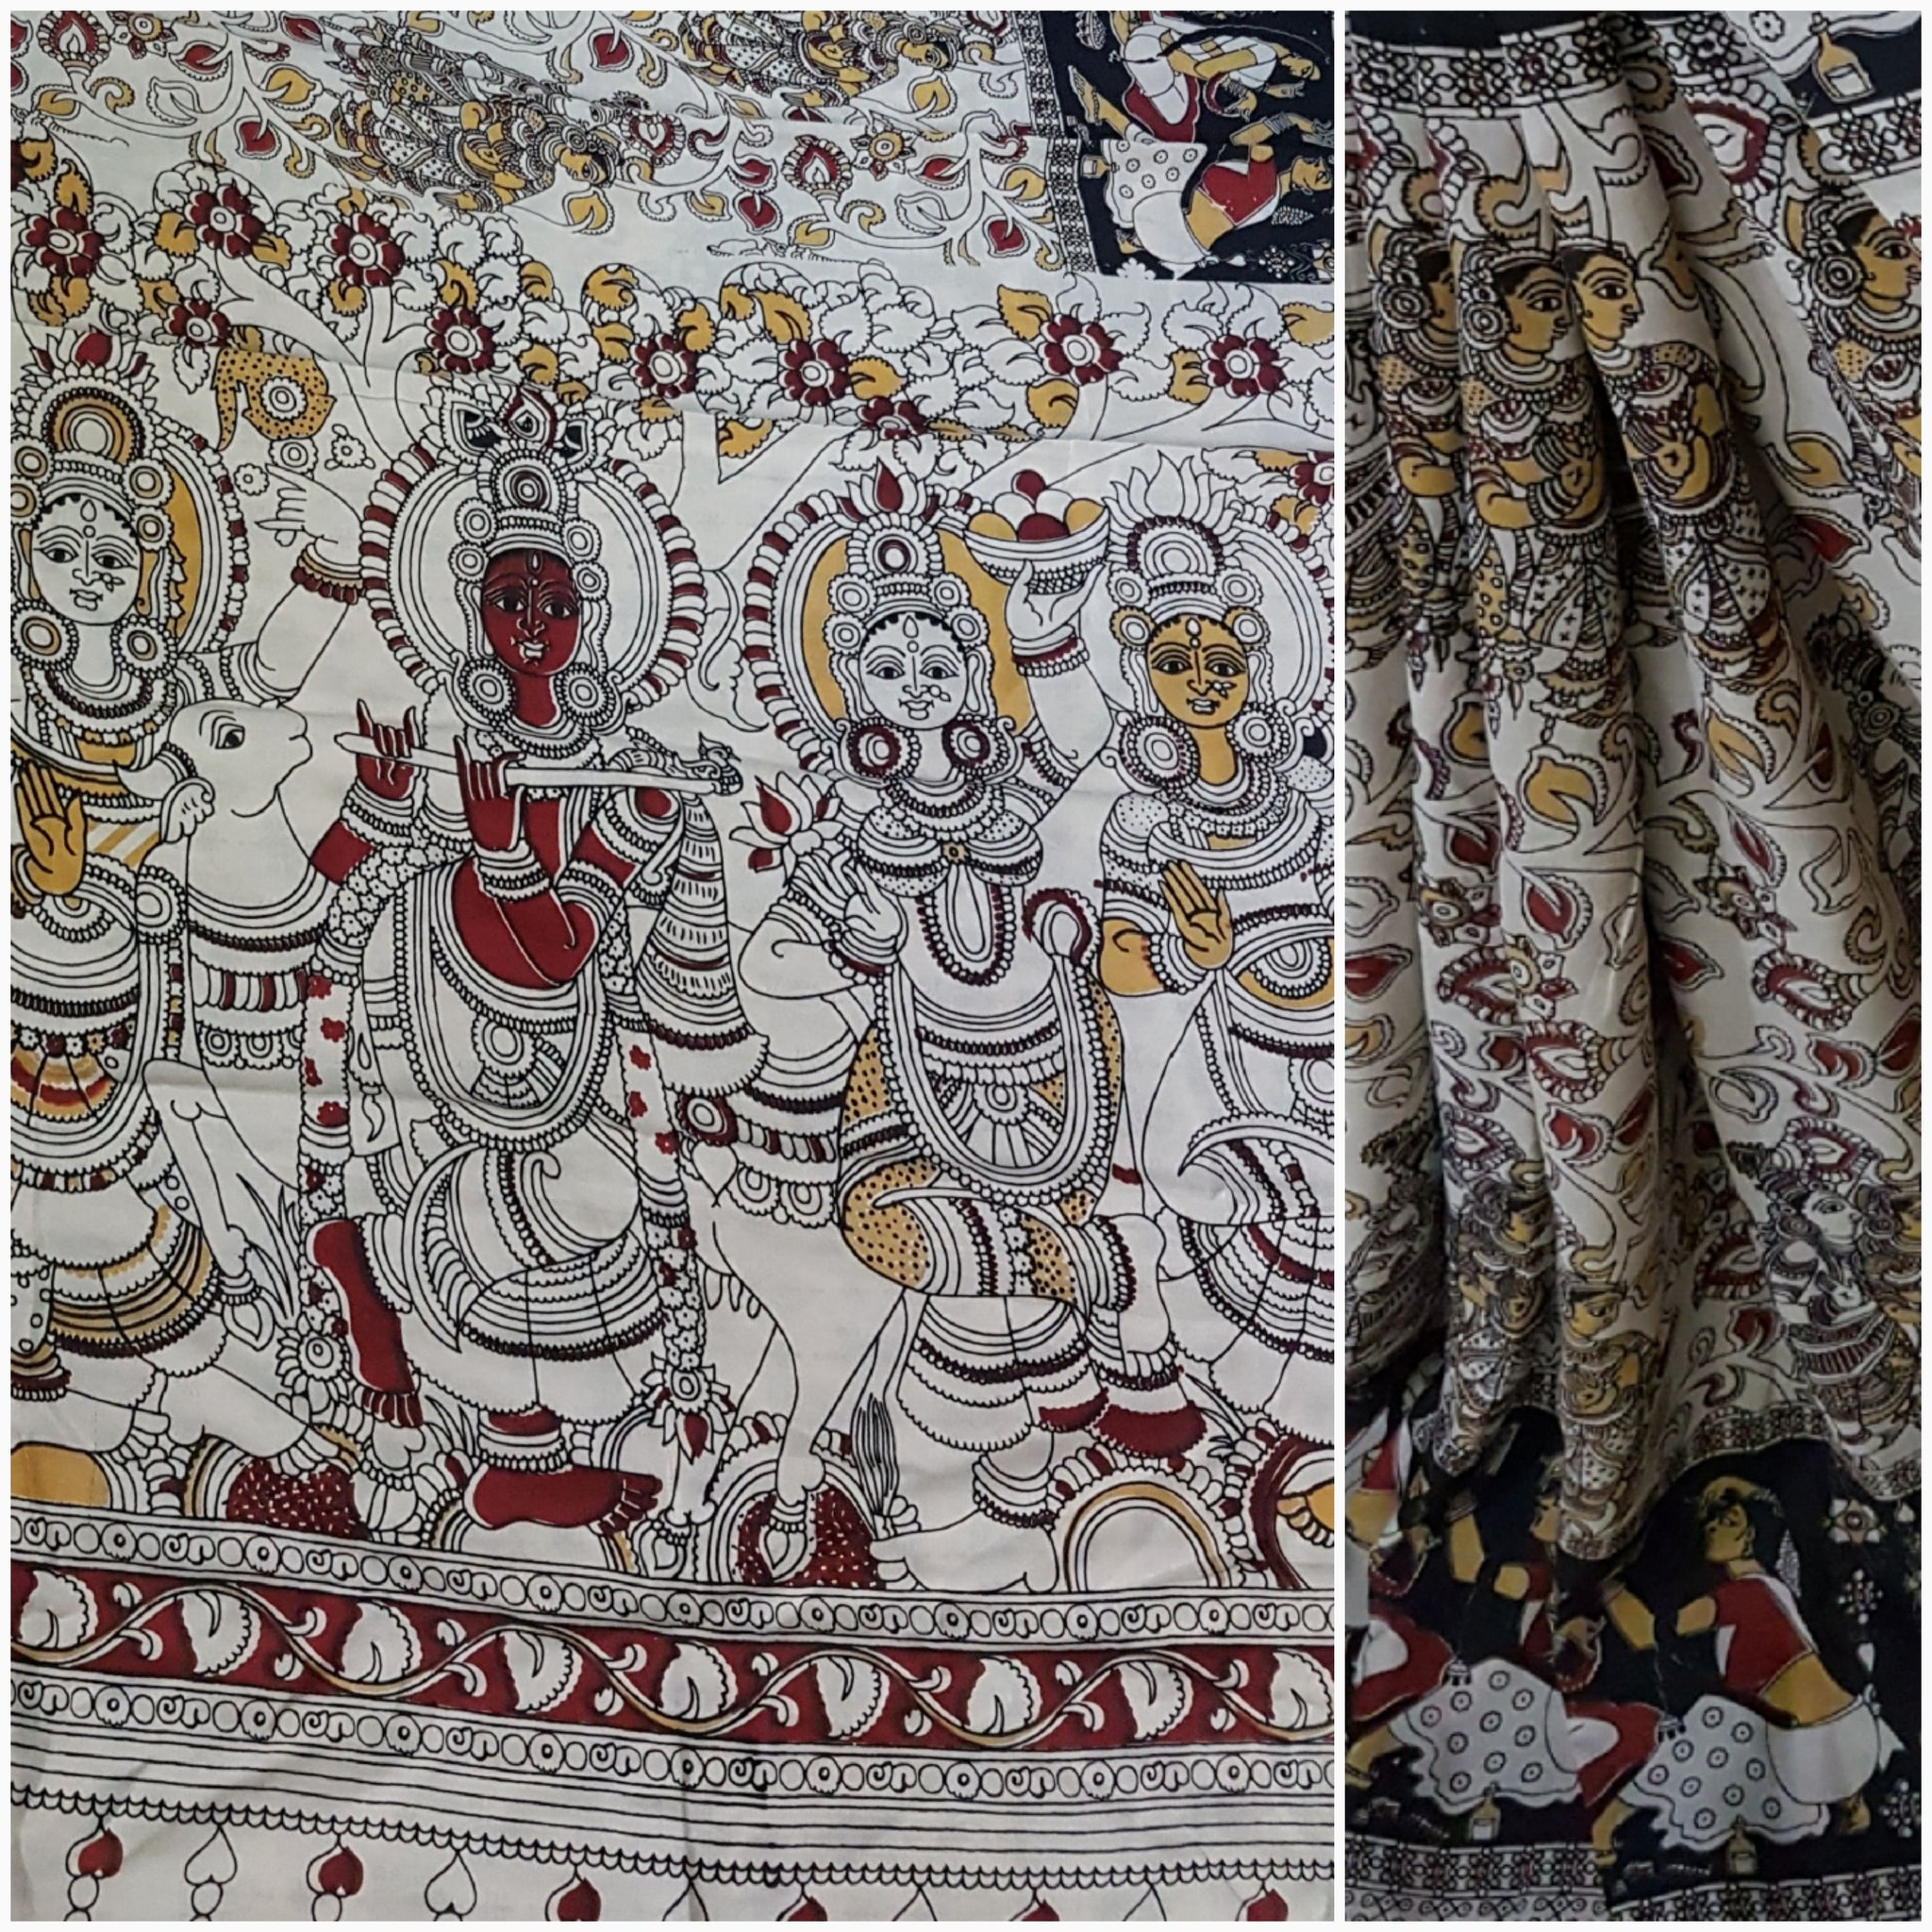 Chennur silk kalamkari with intricate radha Krishna motif on pallu.